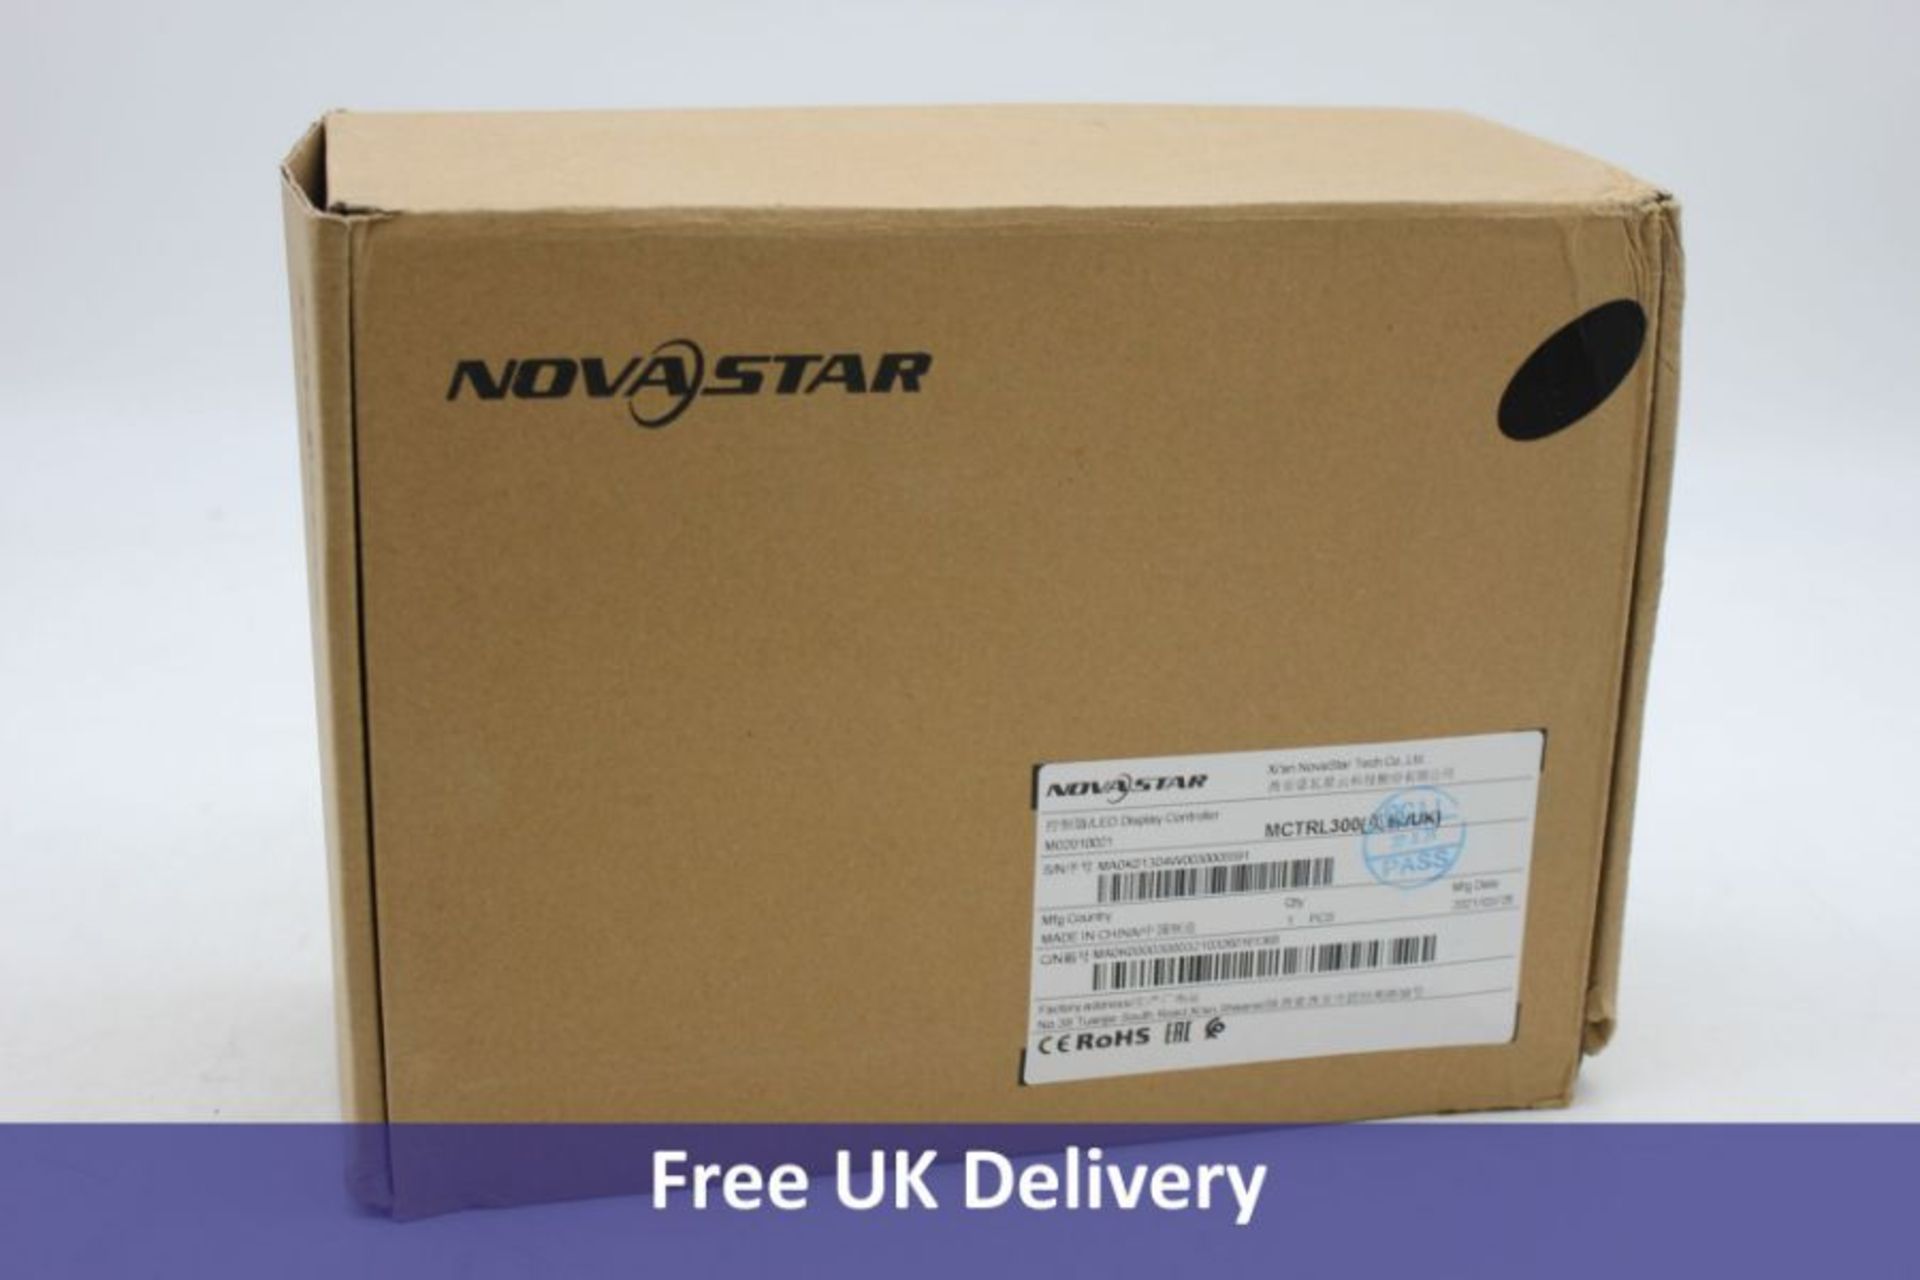 Novastar MCTRL300 LED Processor Sending Box